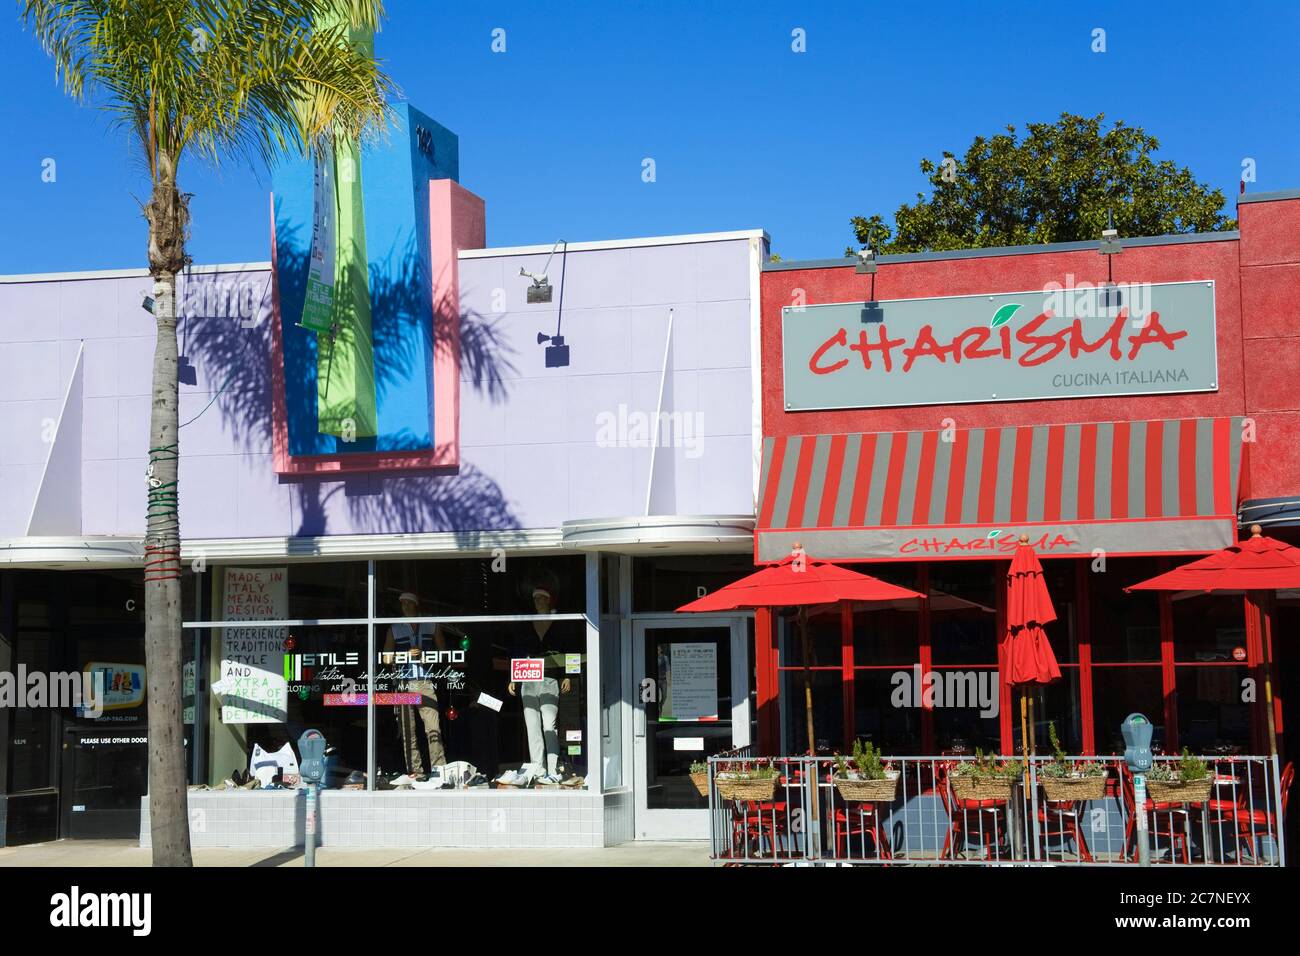 Charisma Italian restaurant in the Hillcrest District, San Diego, California, USA Stock Photo